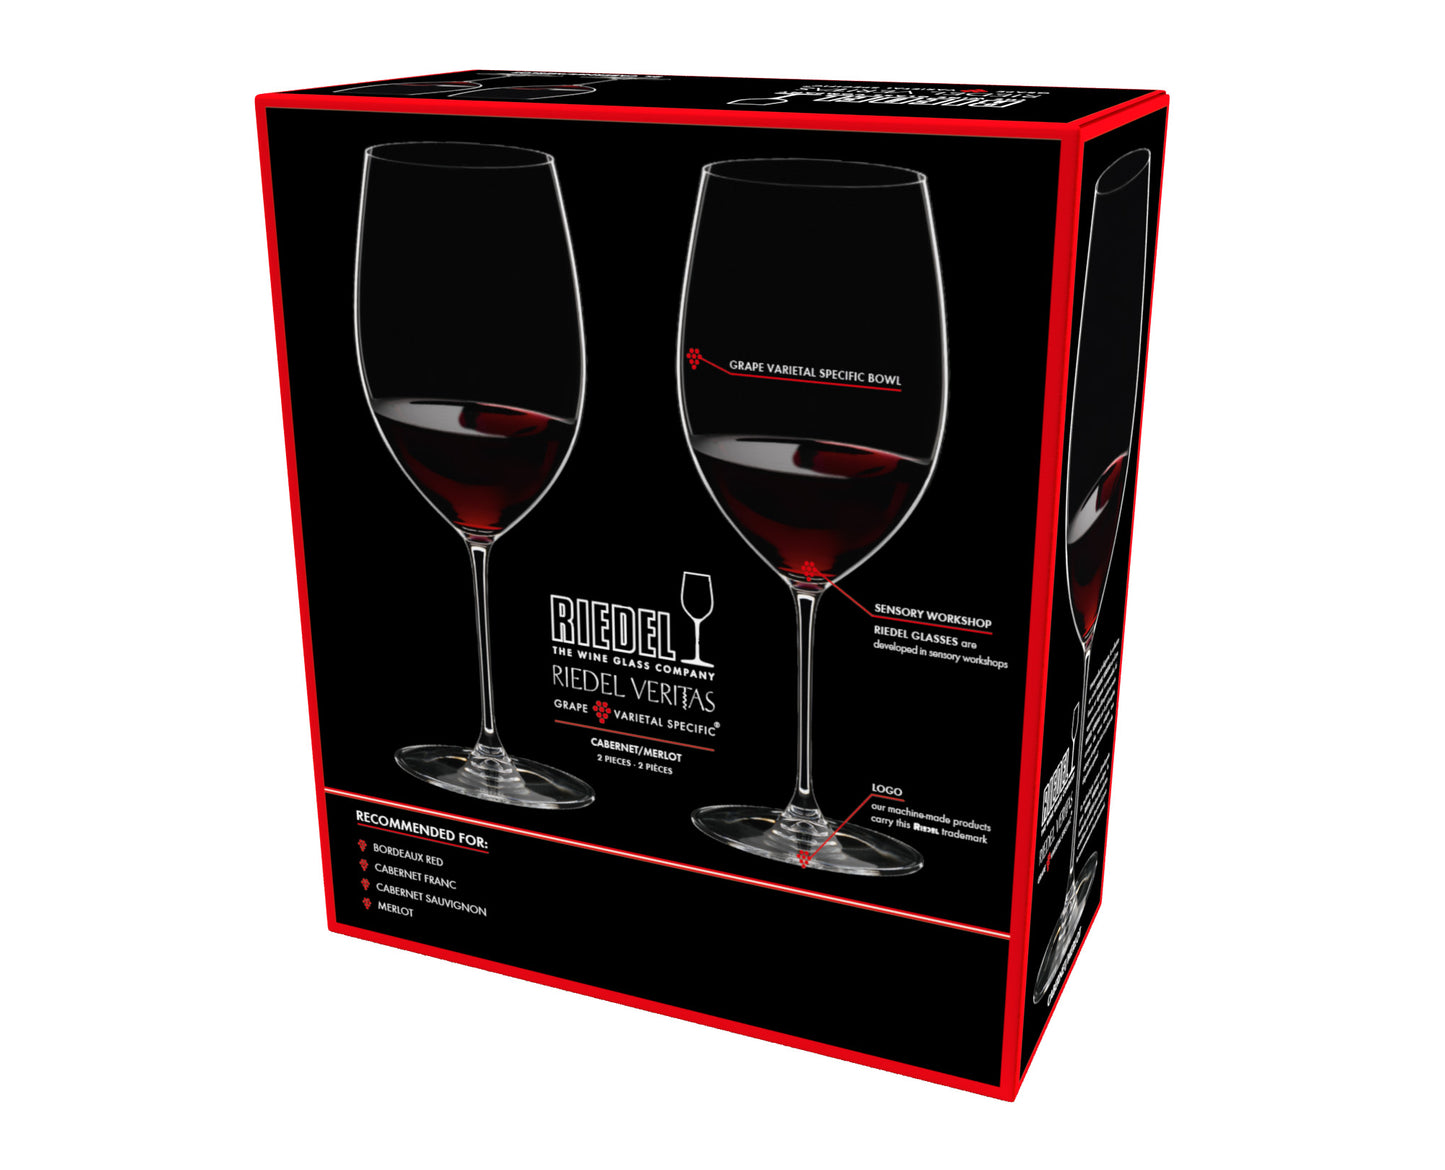 Riedel Veritas Cabernet / Merlot Wine Glass Set of 2